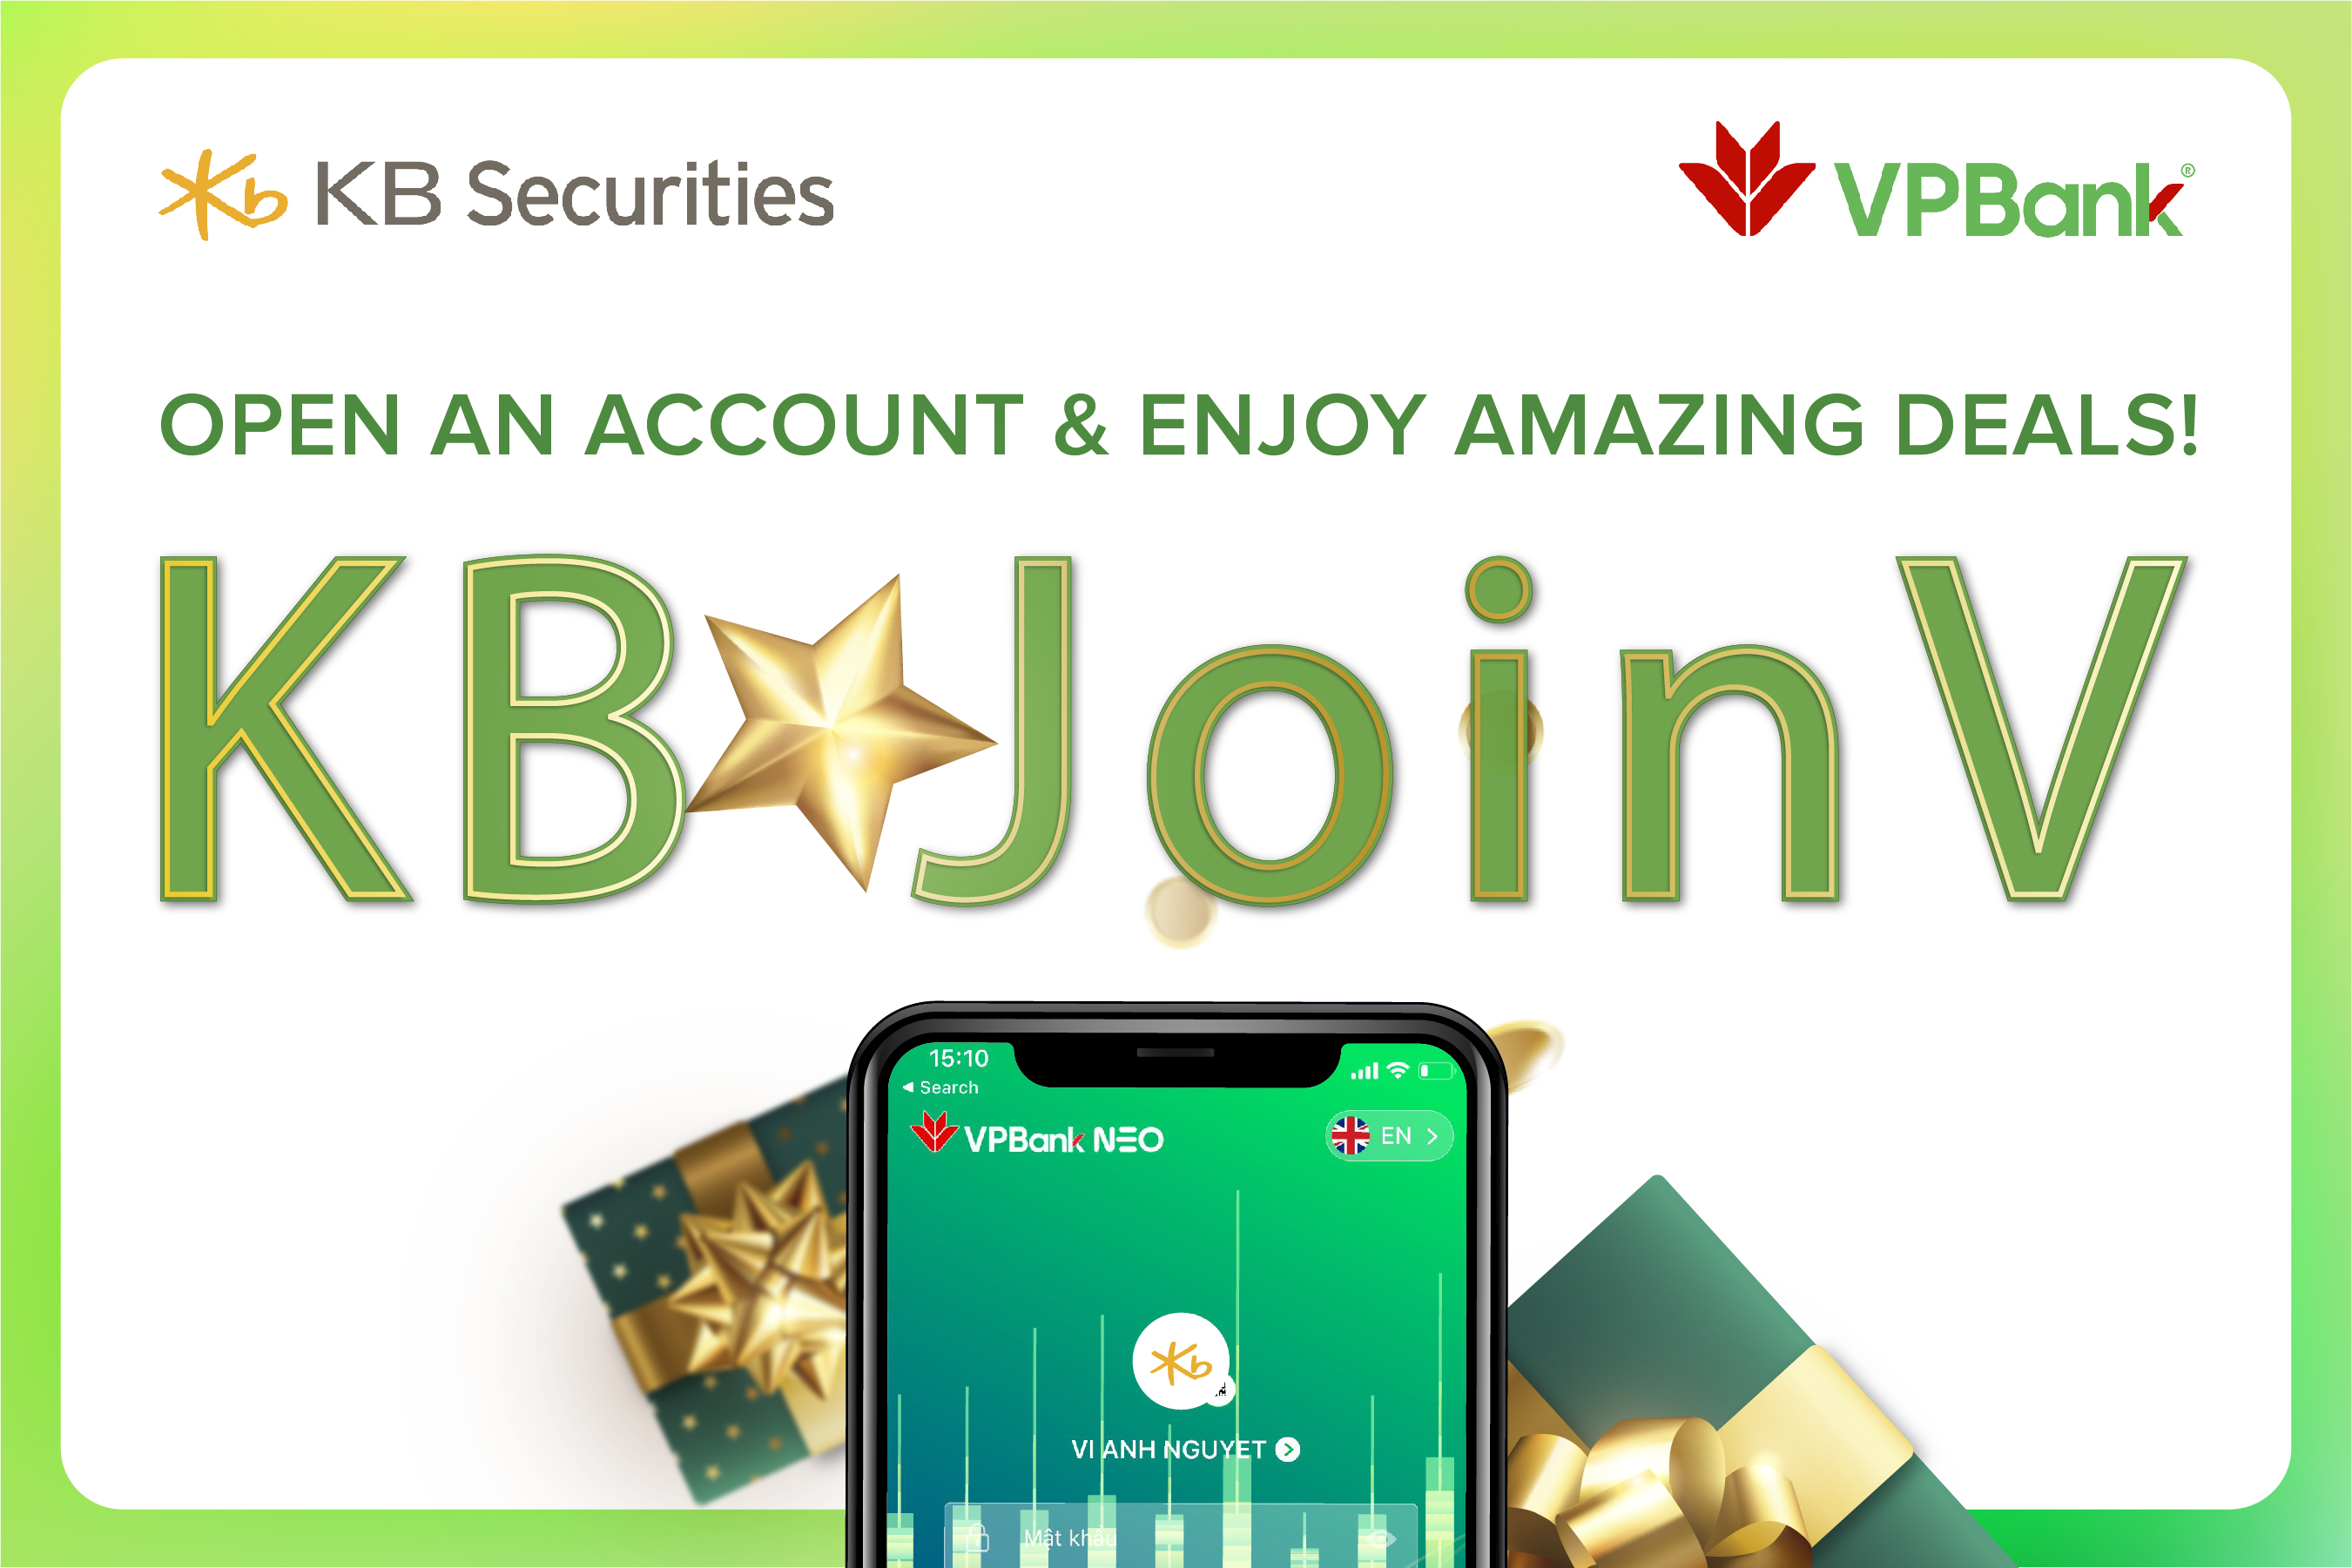  KB-JoinV for VPBanks customers